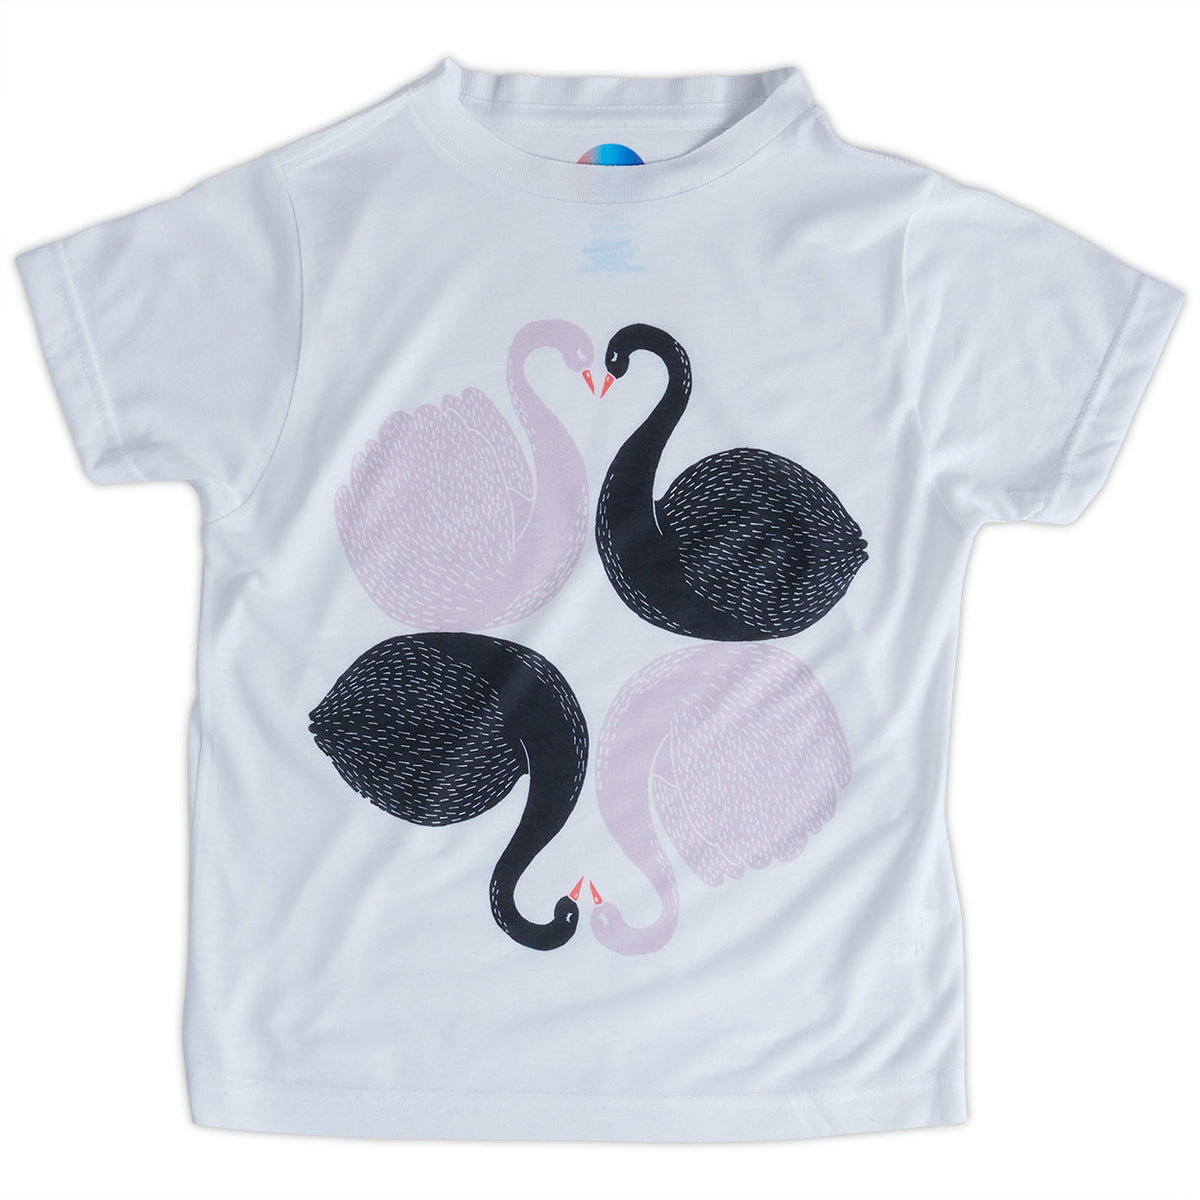 Girls Love Swans Graphic Tshirt Black White Gray Size Xs L Sunpoplife